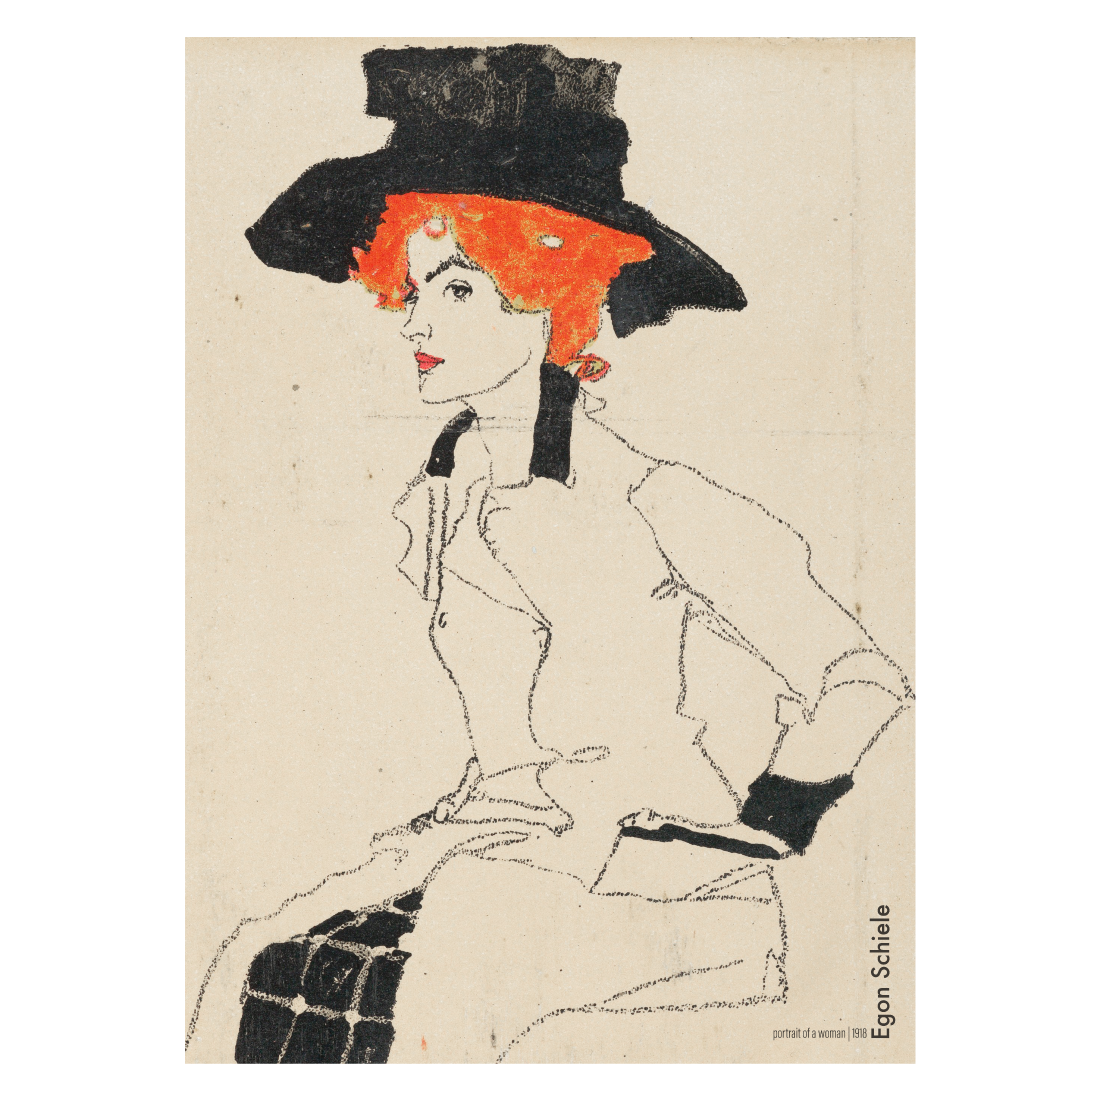 Kunstplakat med Egon Schiele skitsen "Portrait of a woman"